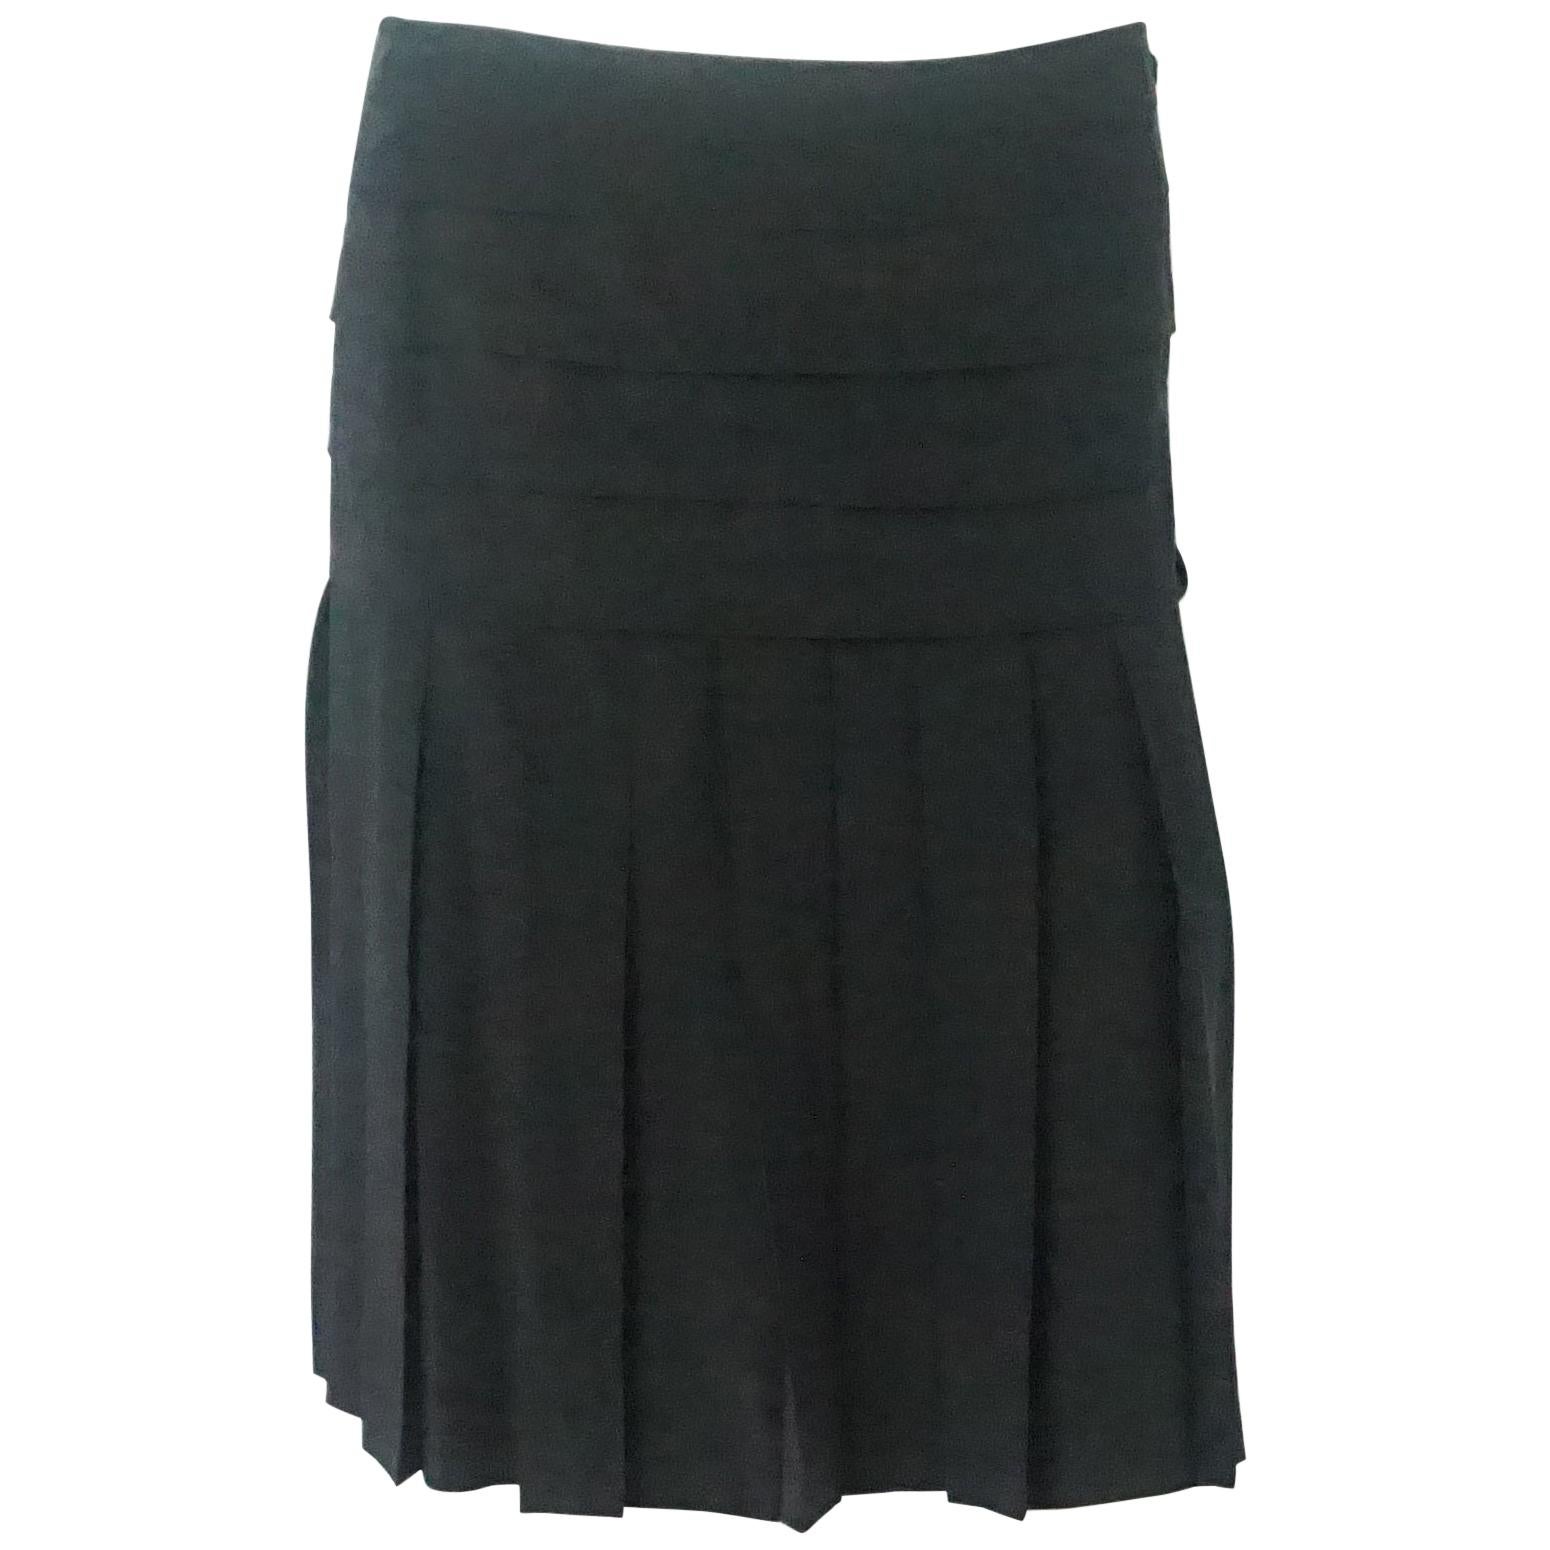 Chanel Black Silk Skirt - 38 - NWT